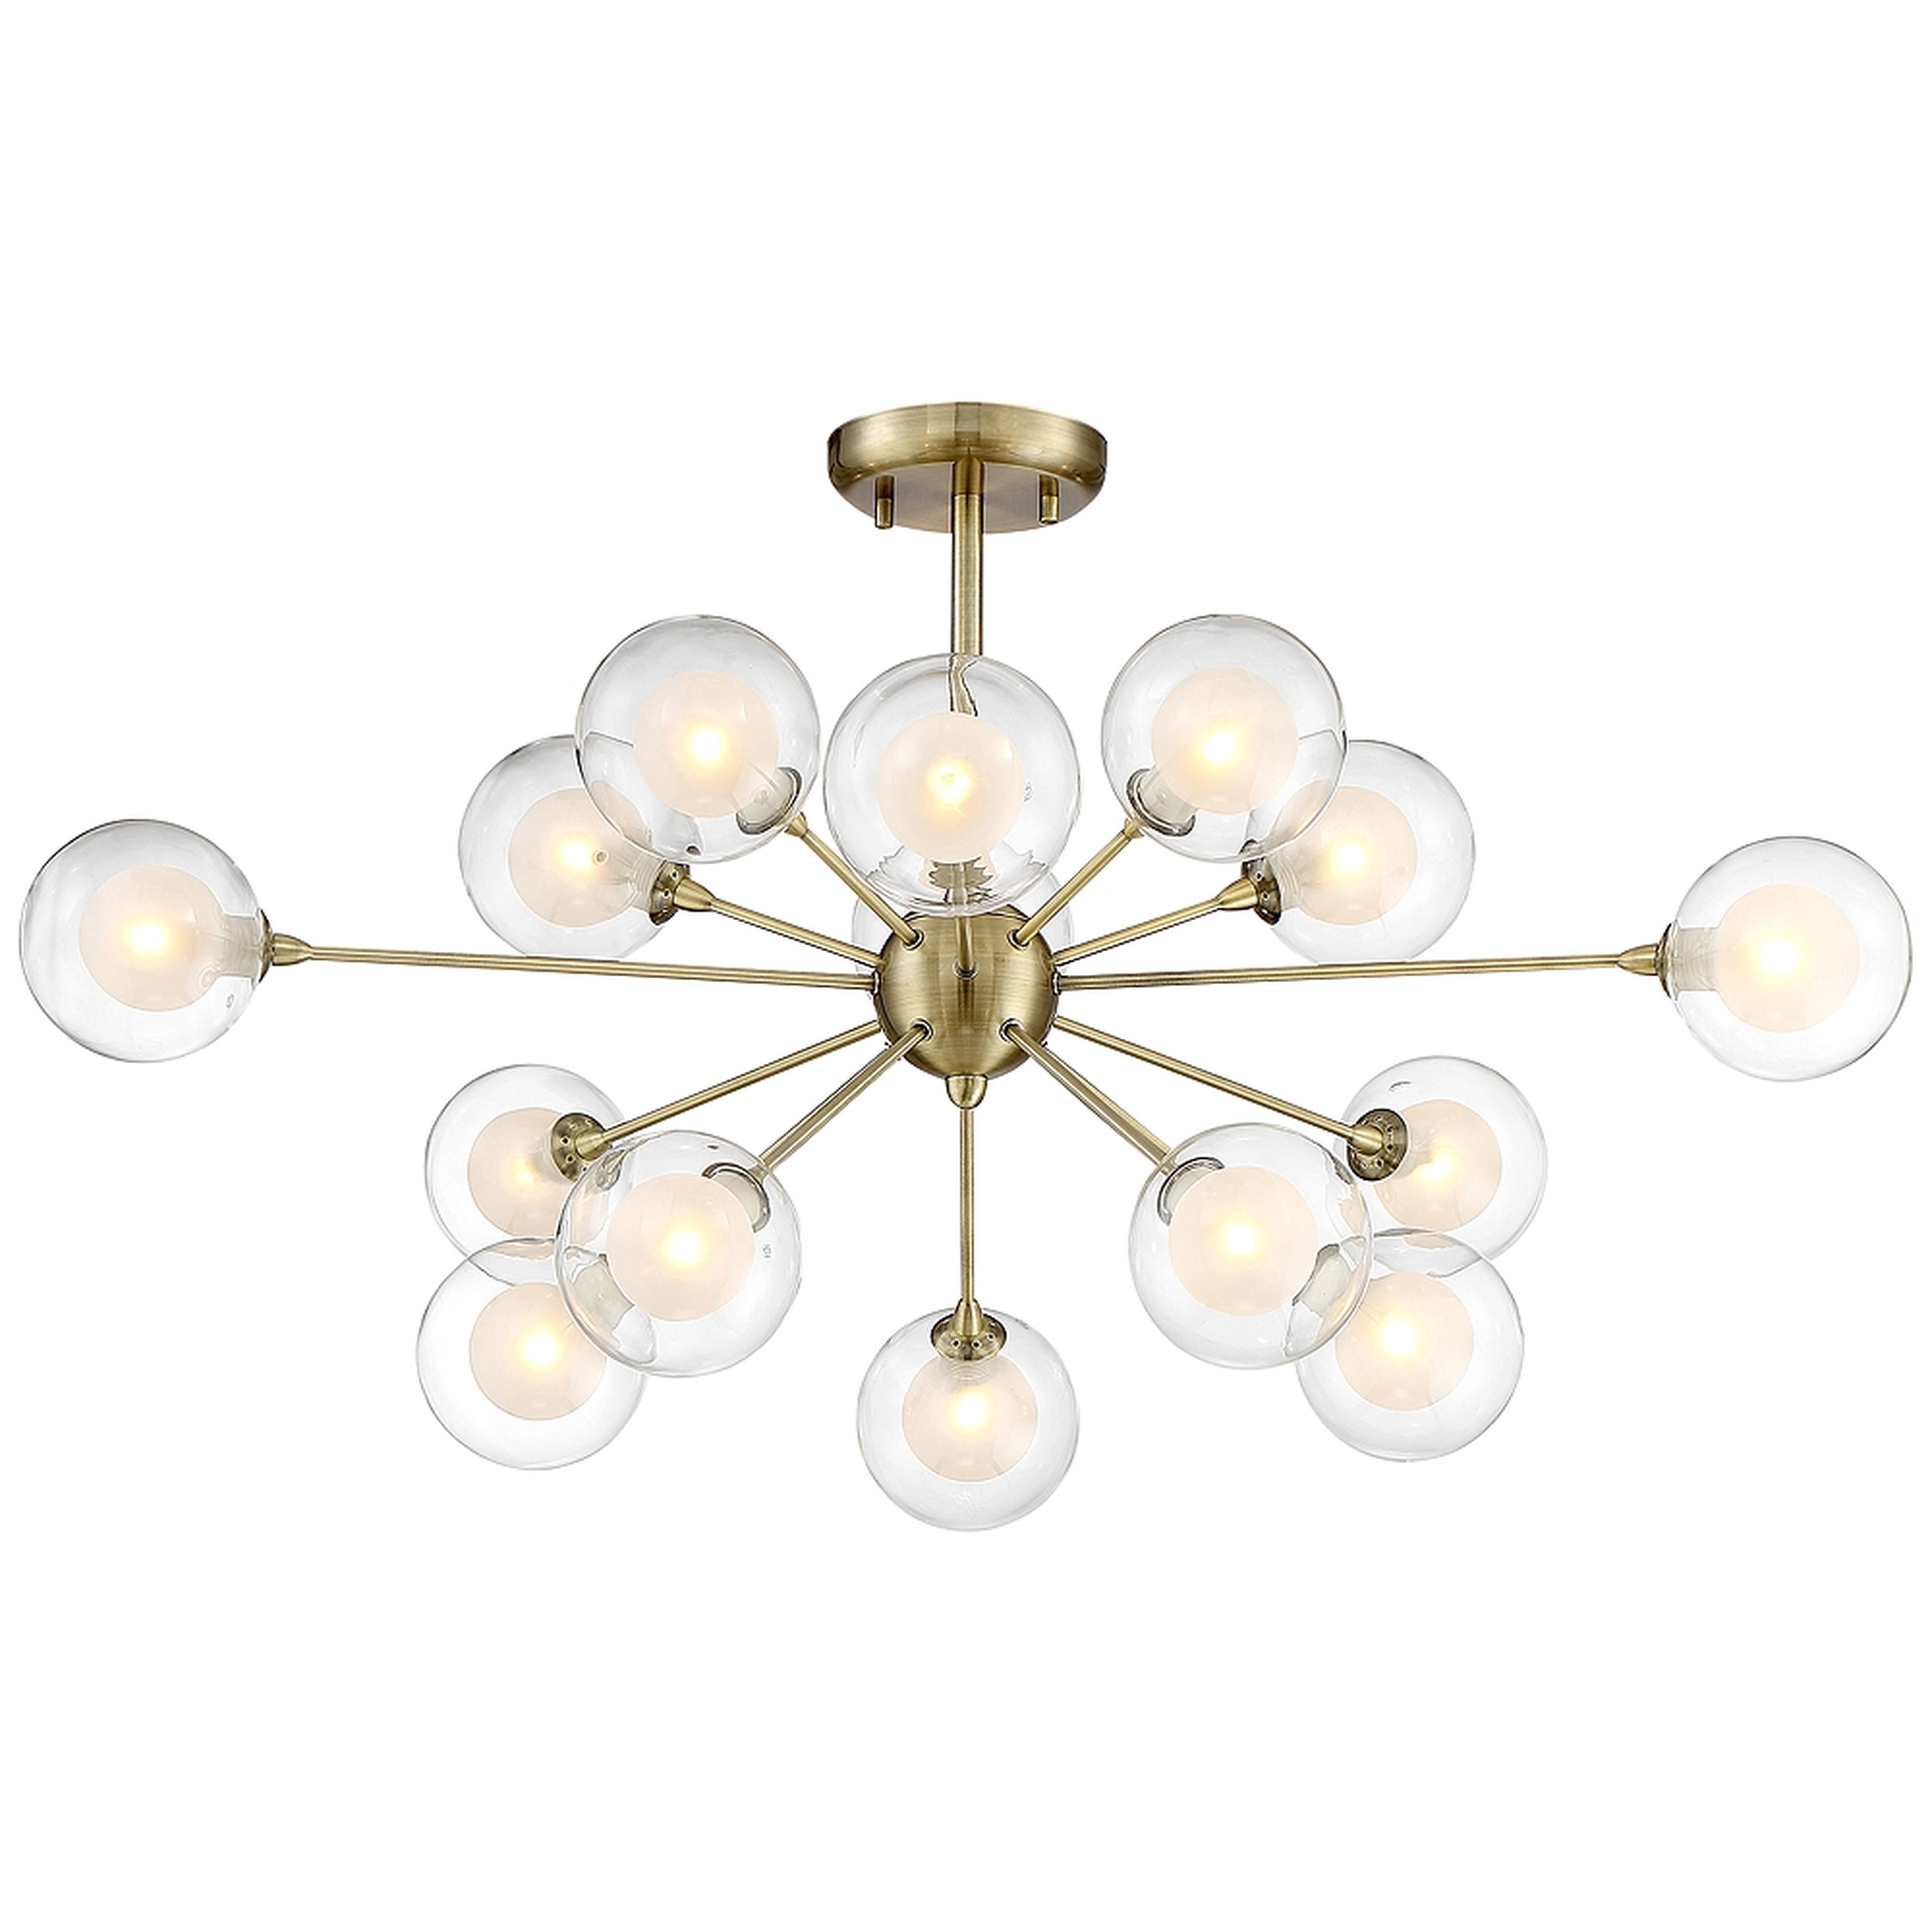 Possini Euro Design Glass and Brass 15-Light Ceiling Light - Style # 64V58 - Lamps Plus